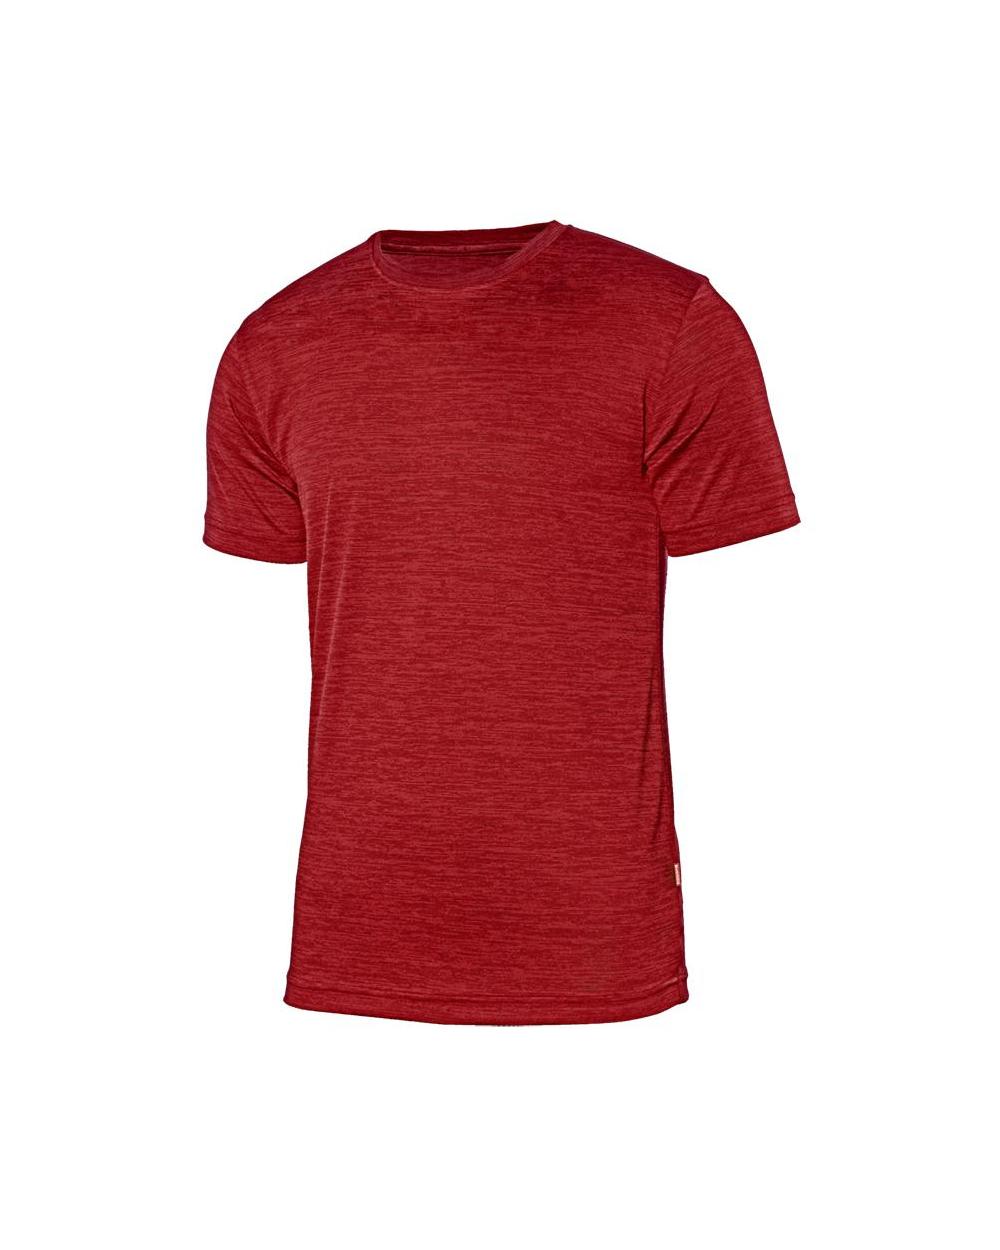 Comprar Camiseta tecnica jaspeada serie 105507 online barato Rojo Jaspeado